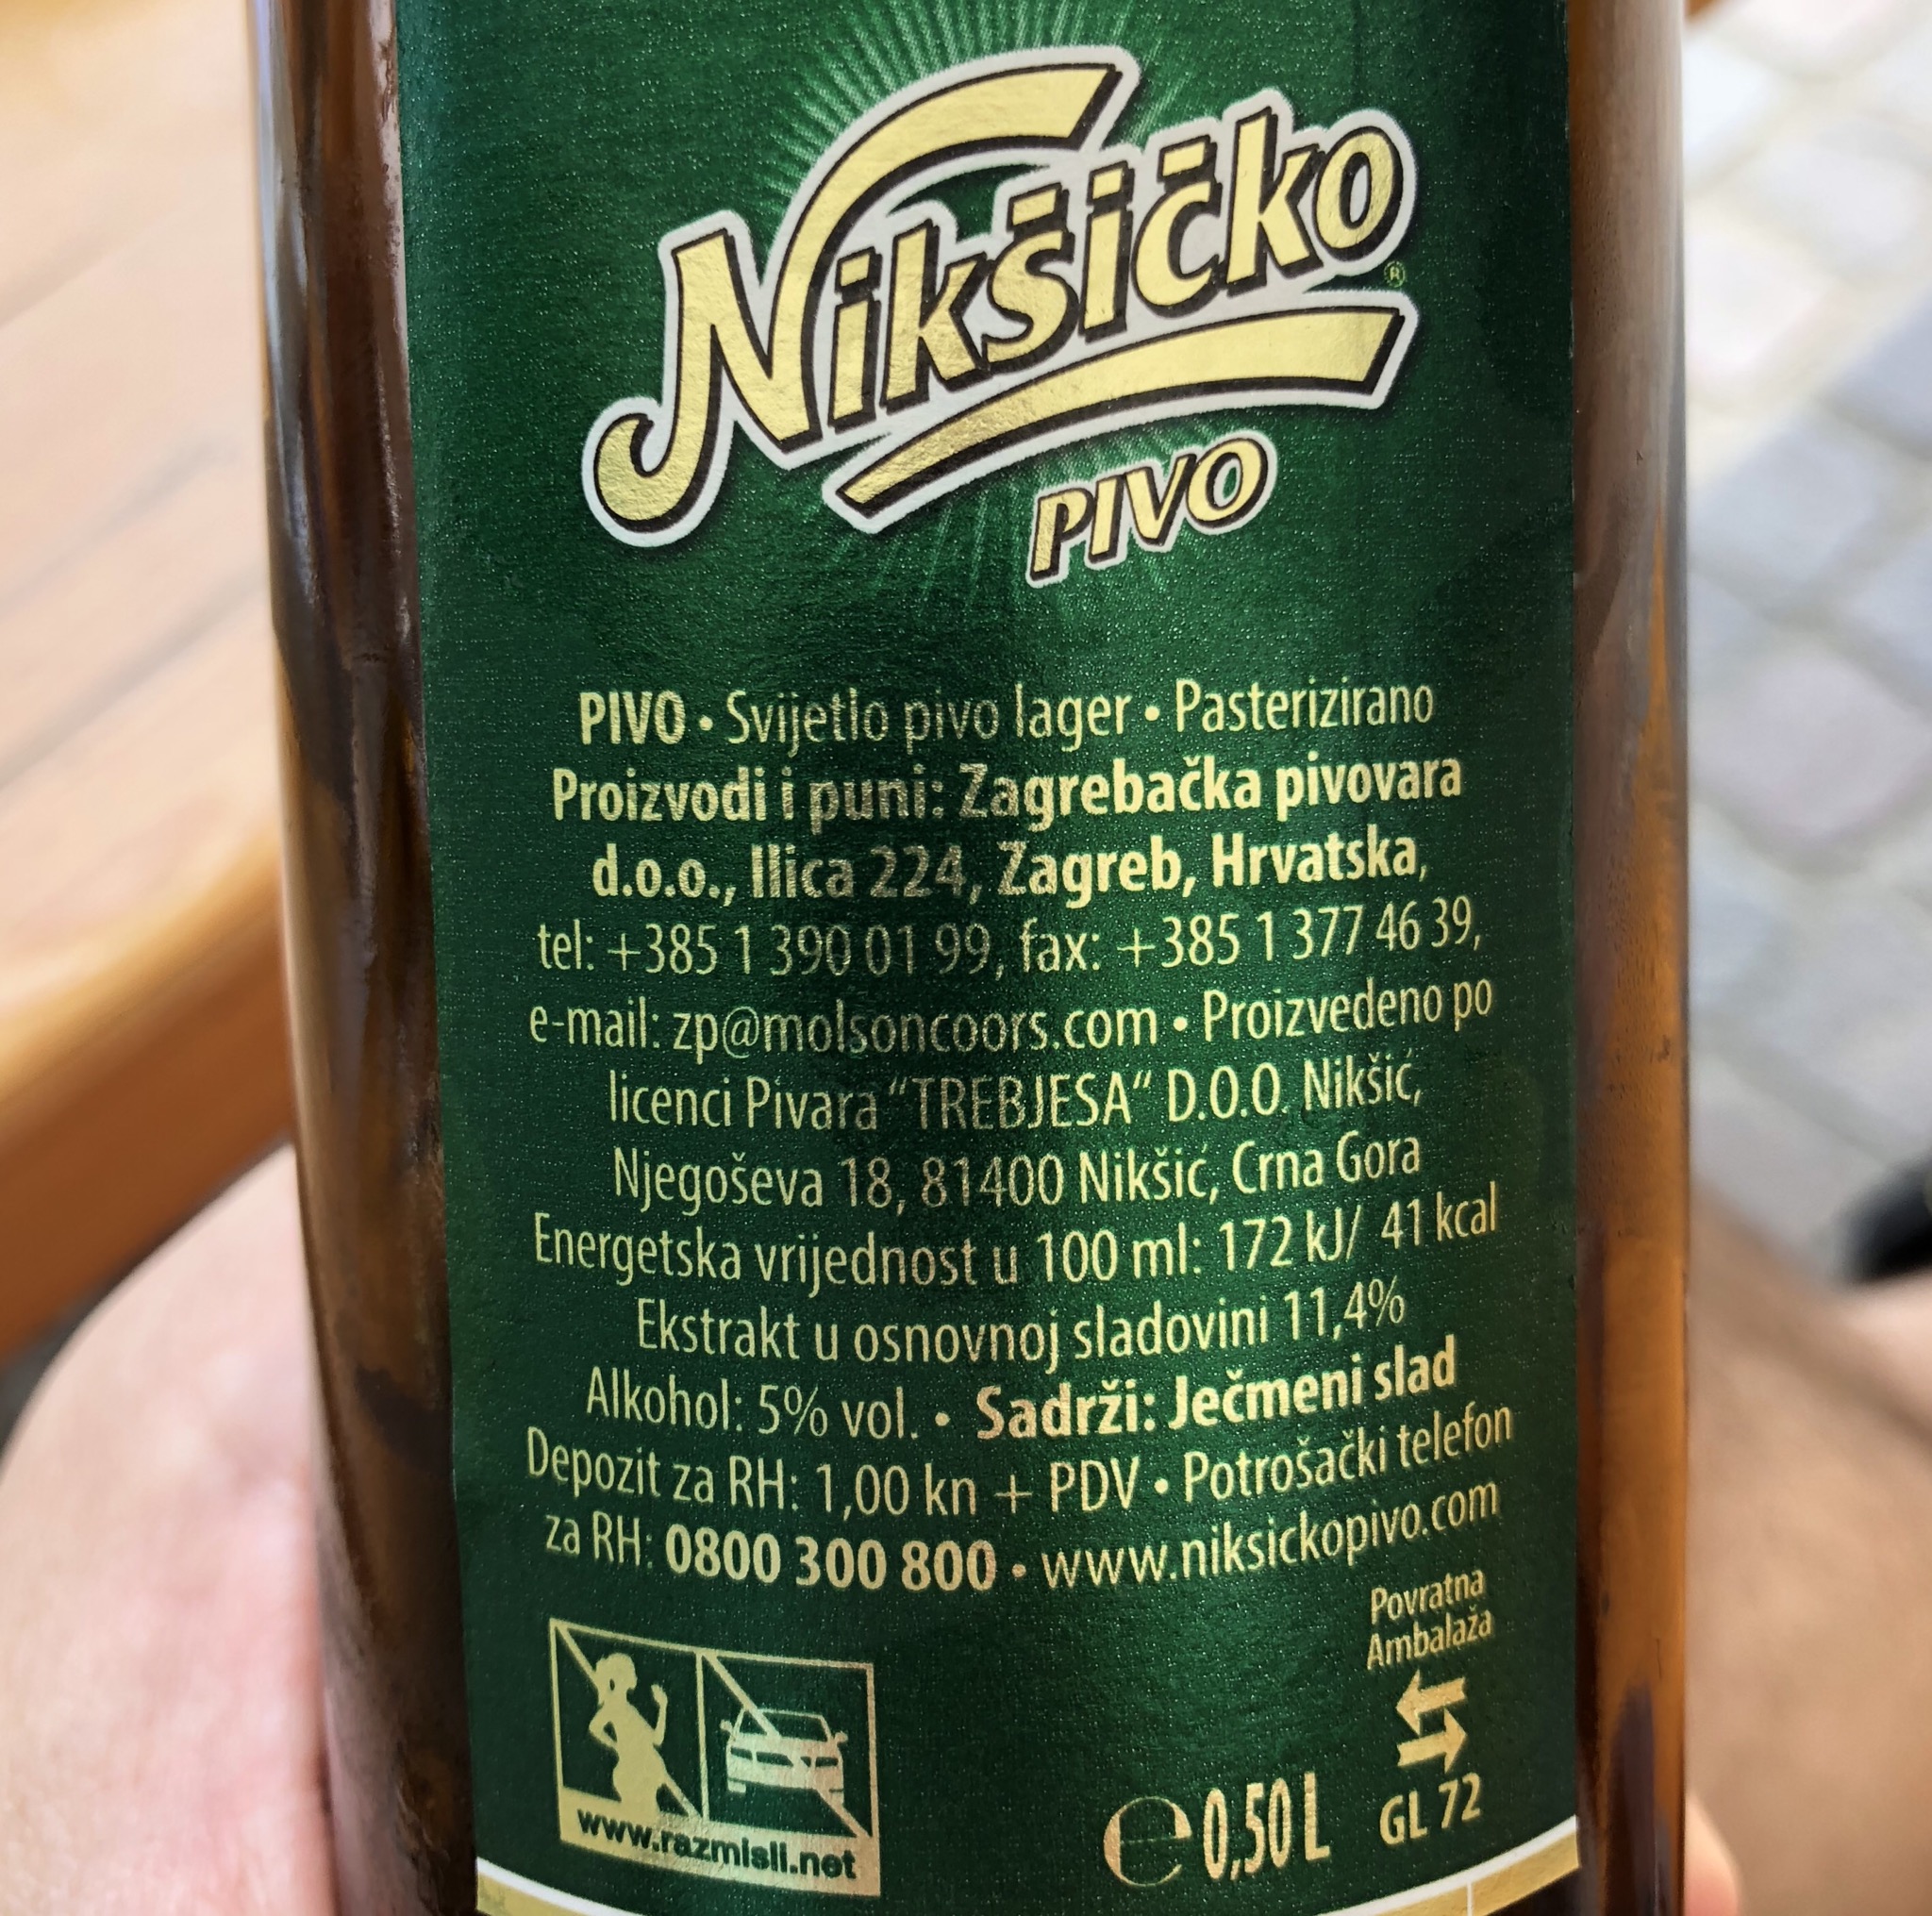 Nikšićko pivo, made in Croatia